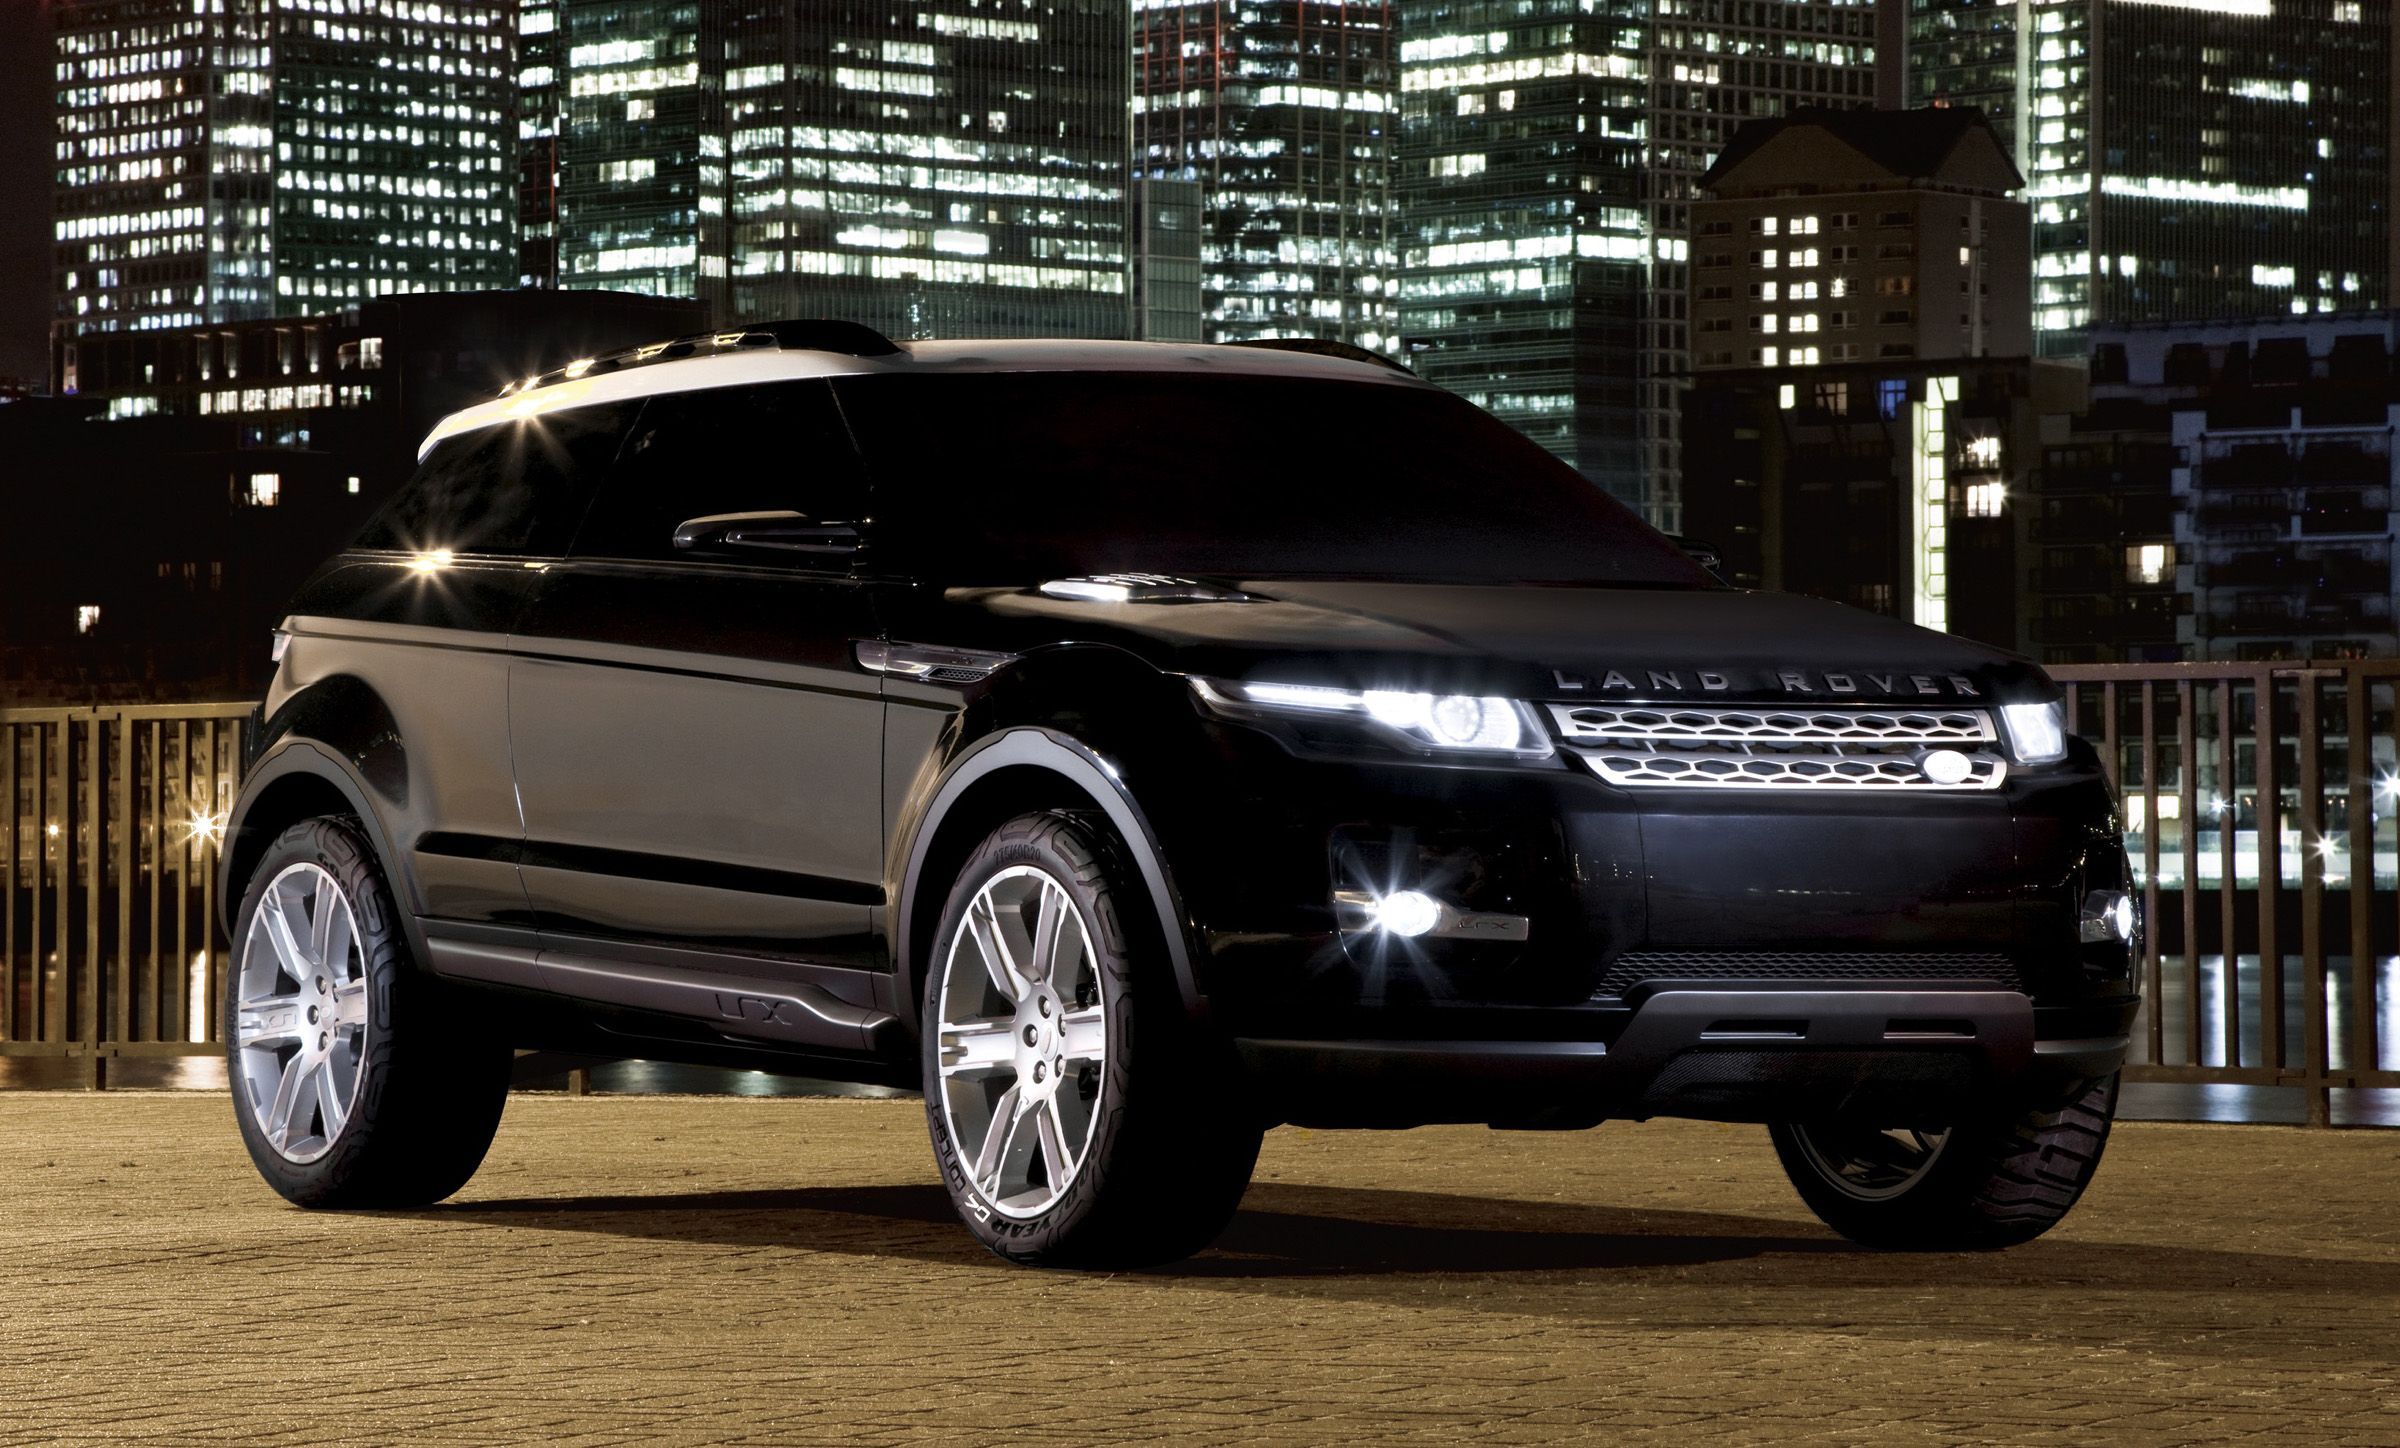 1500 Range Rover Pictures  Download Free Images on Unsplash